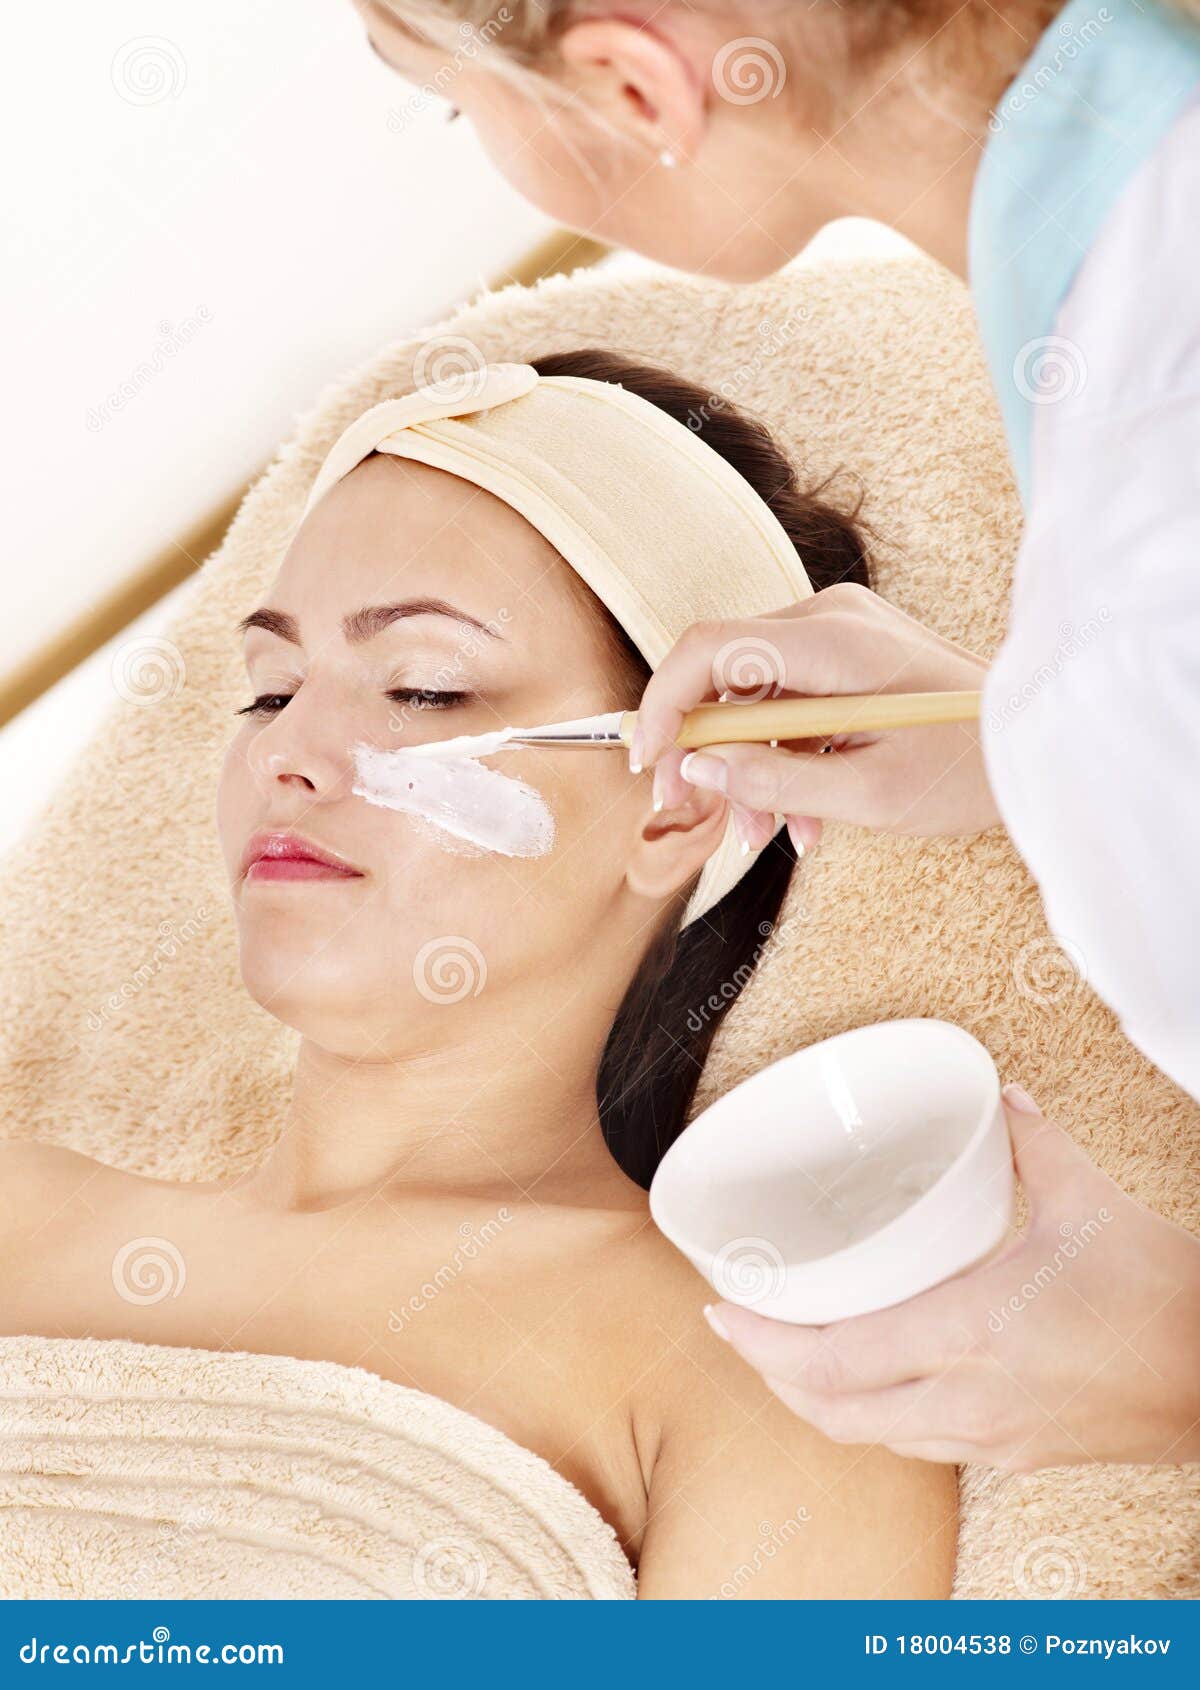 beautician applying facial mask by woman.